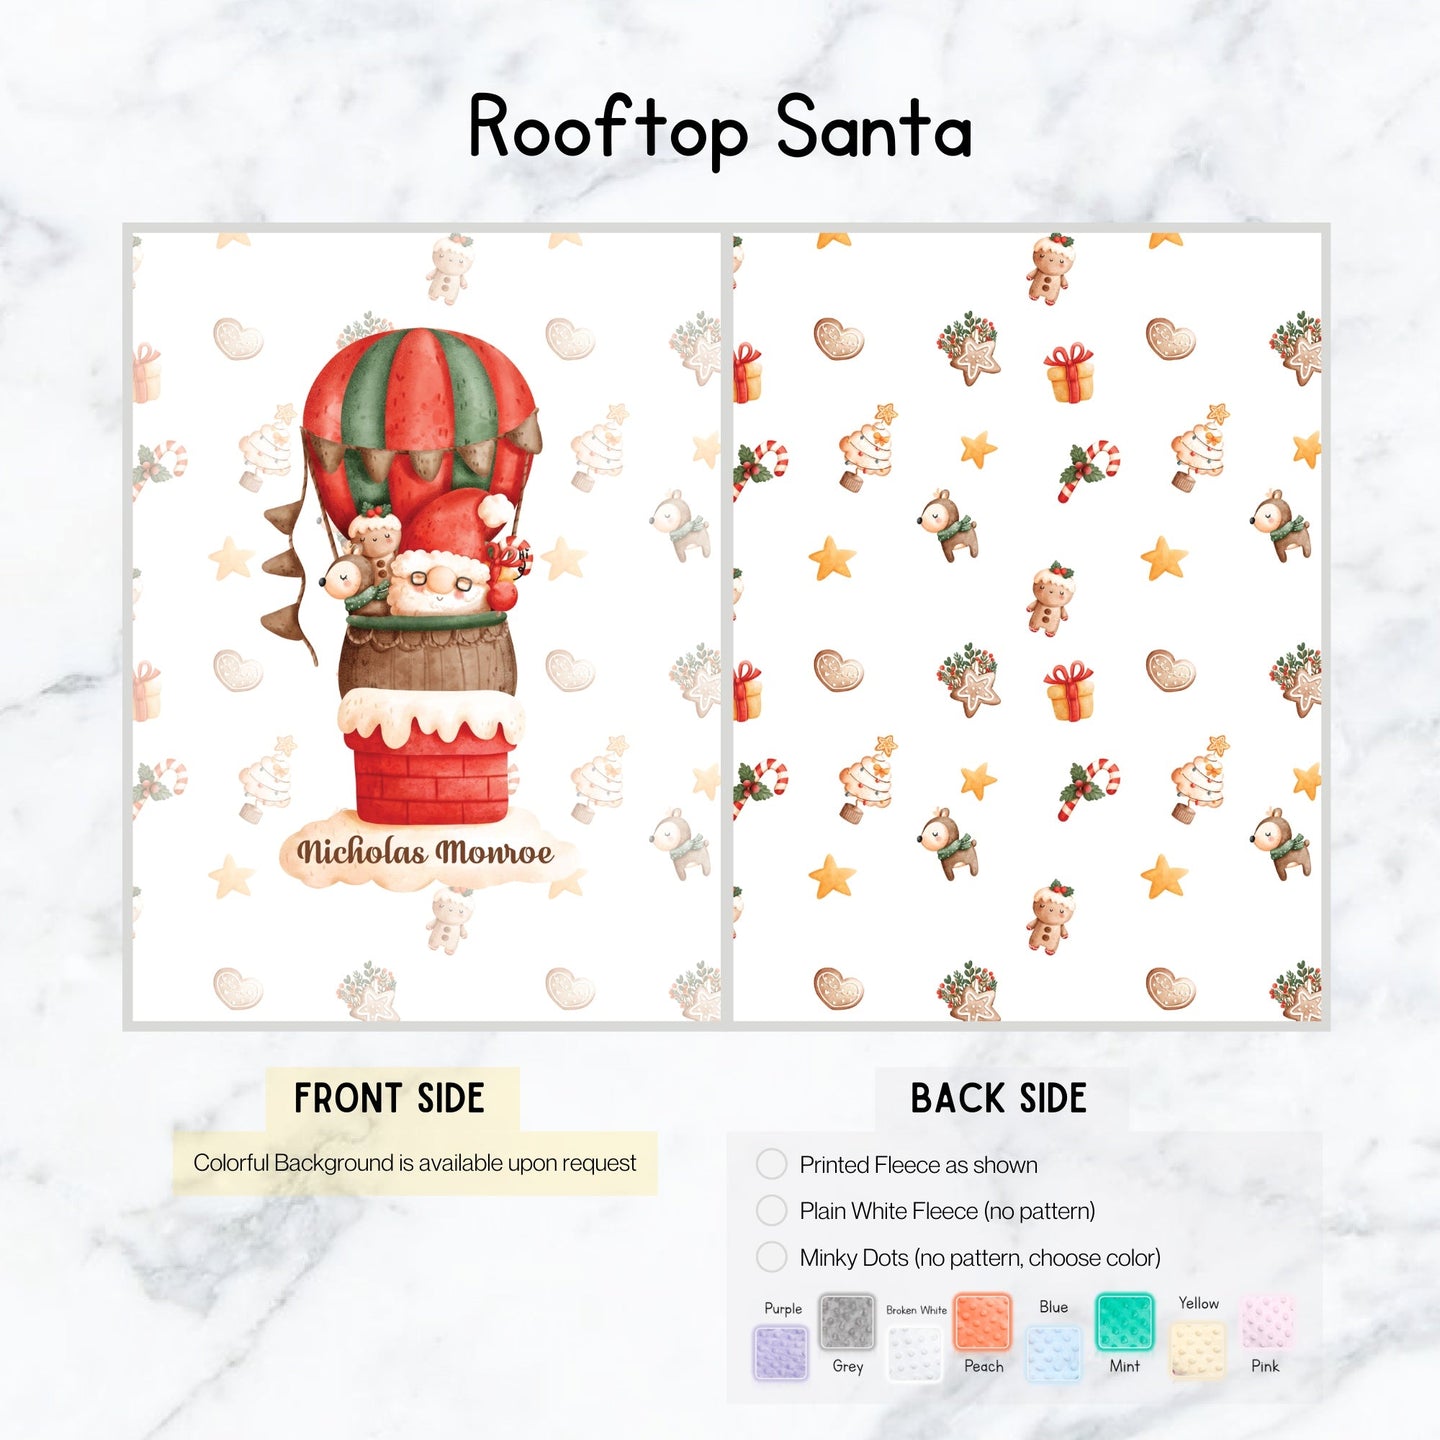 Rooftop Santa